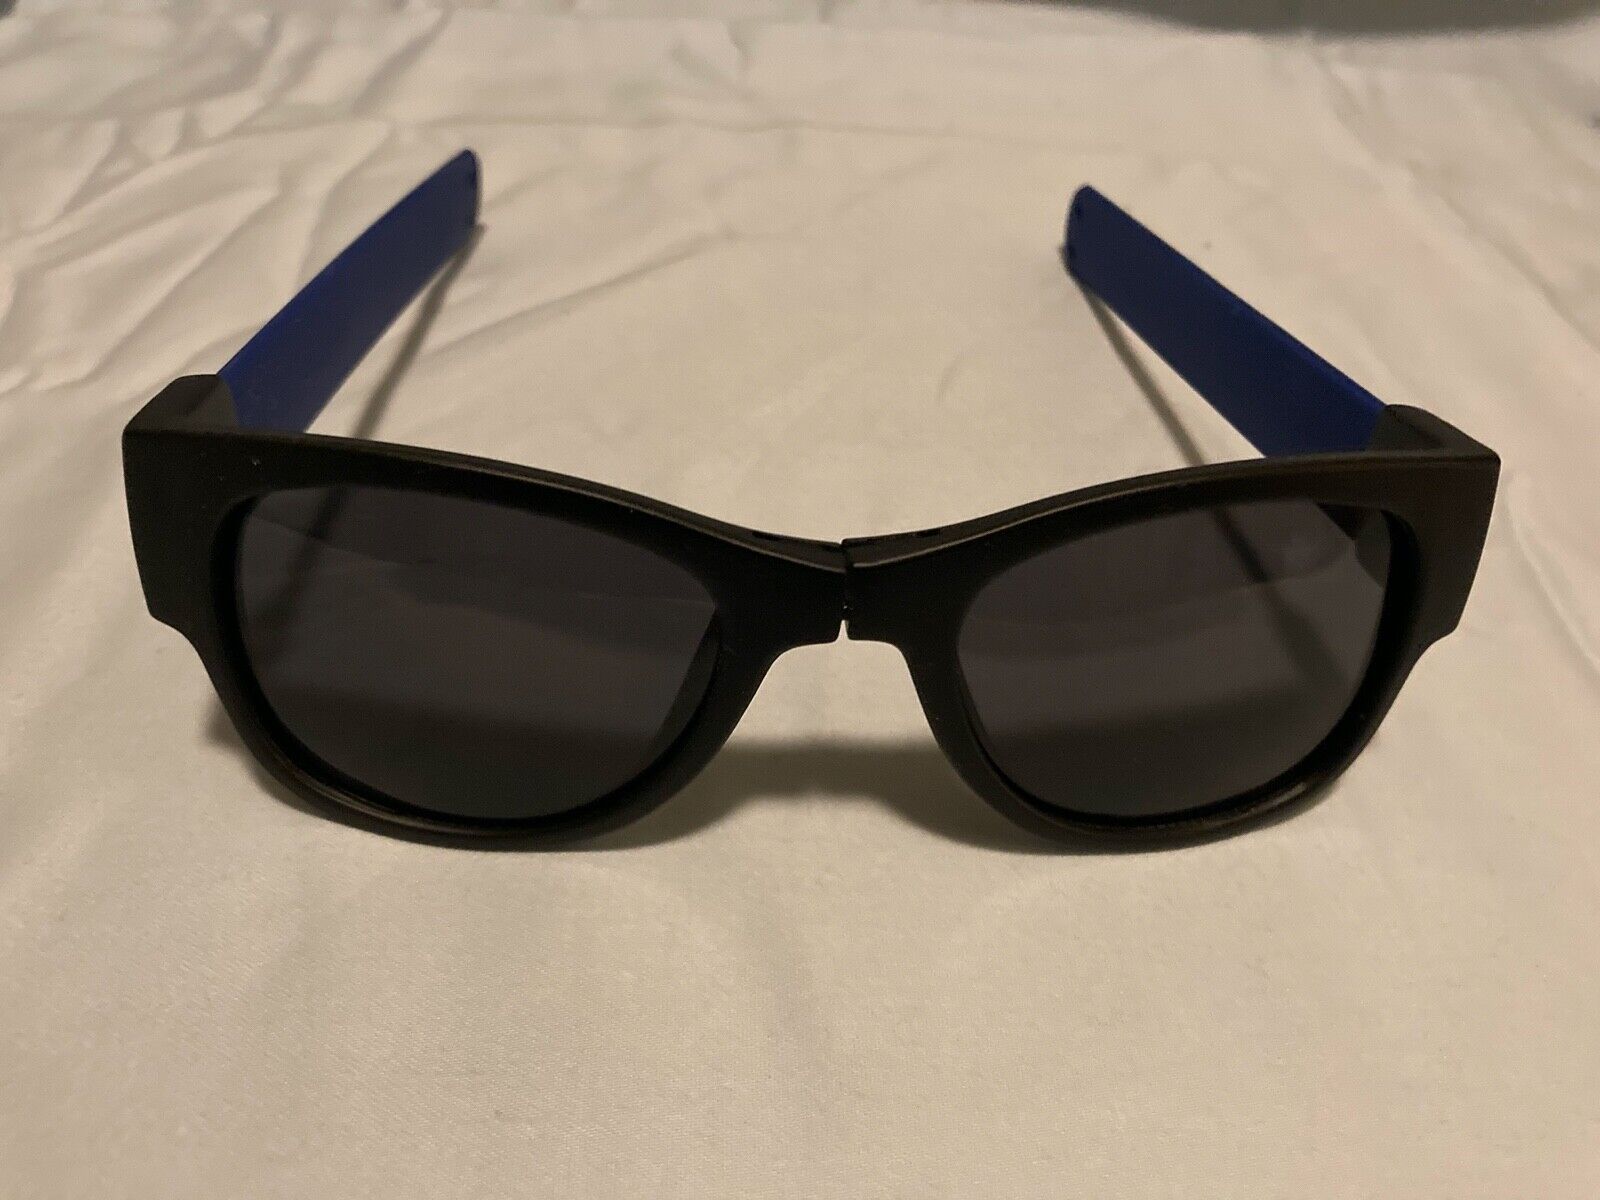 SAMSUNG Promo Black/Blue Folding Sunglasses Sport Foldable Wristband Shades NWOT